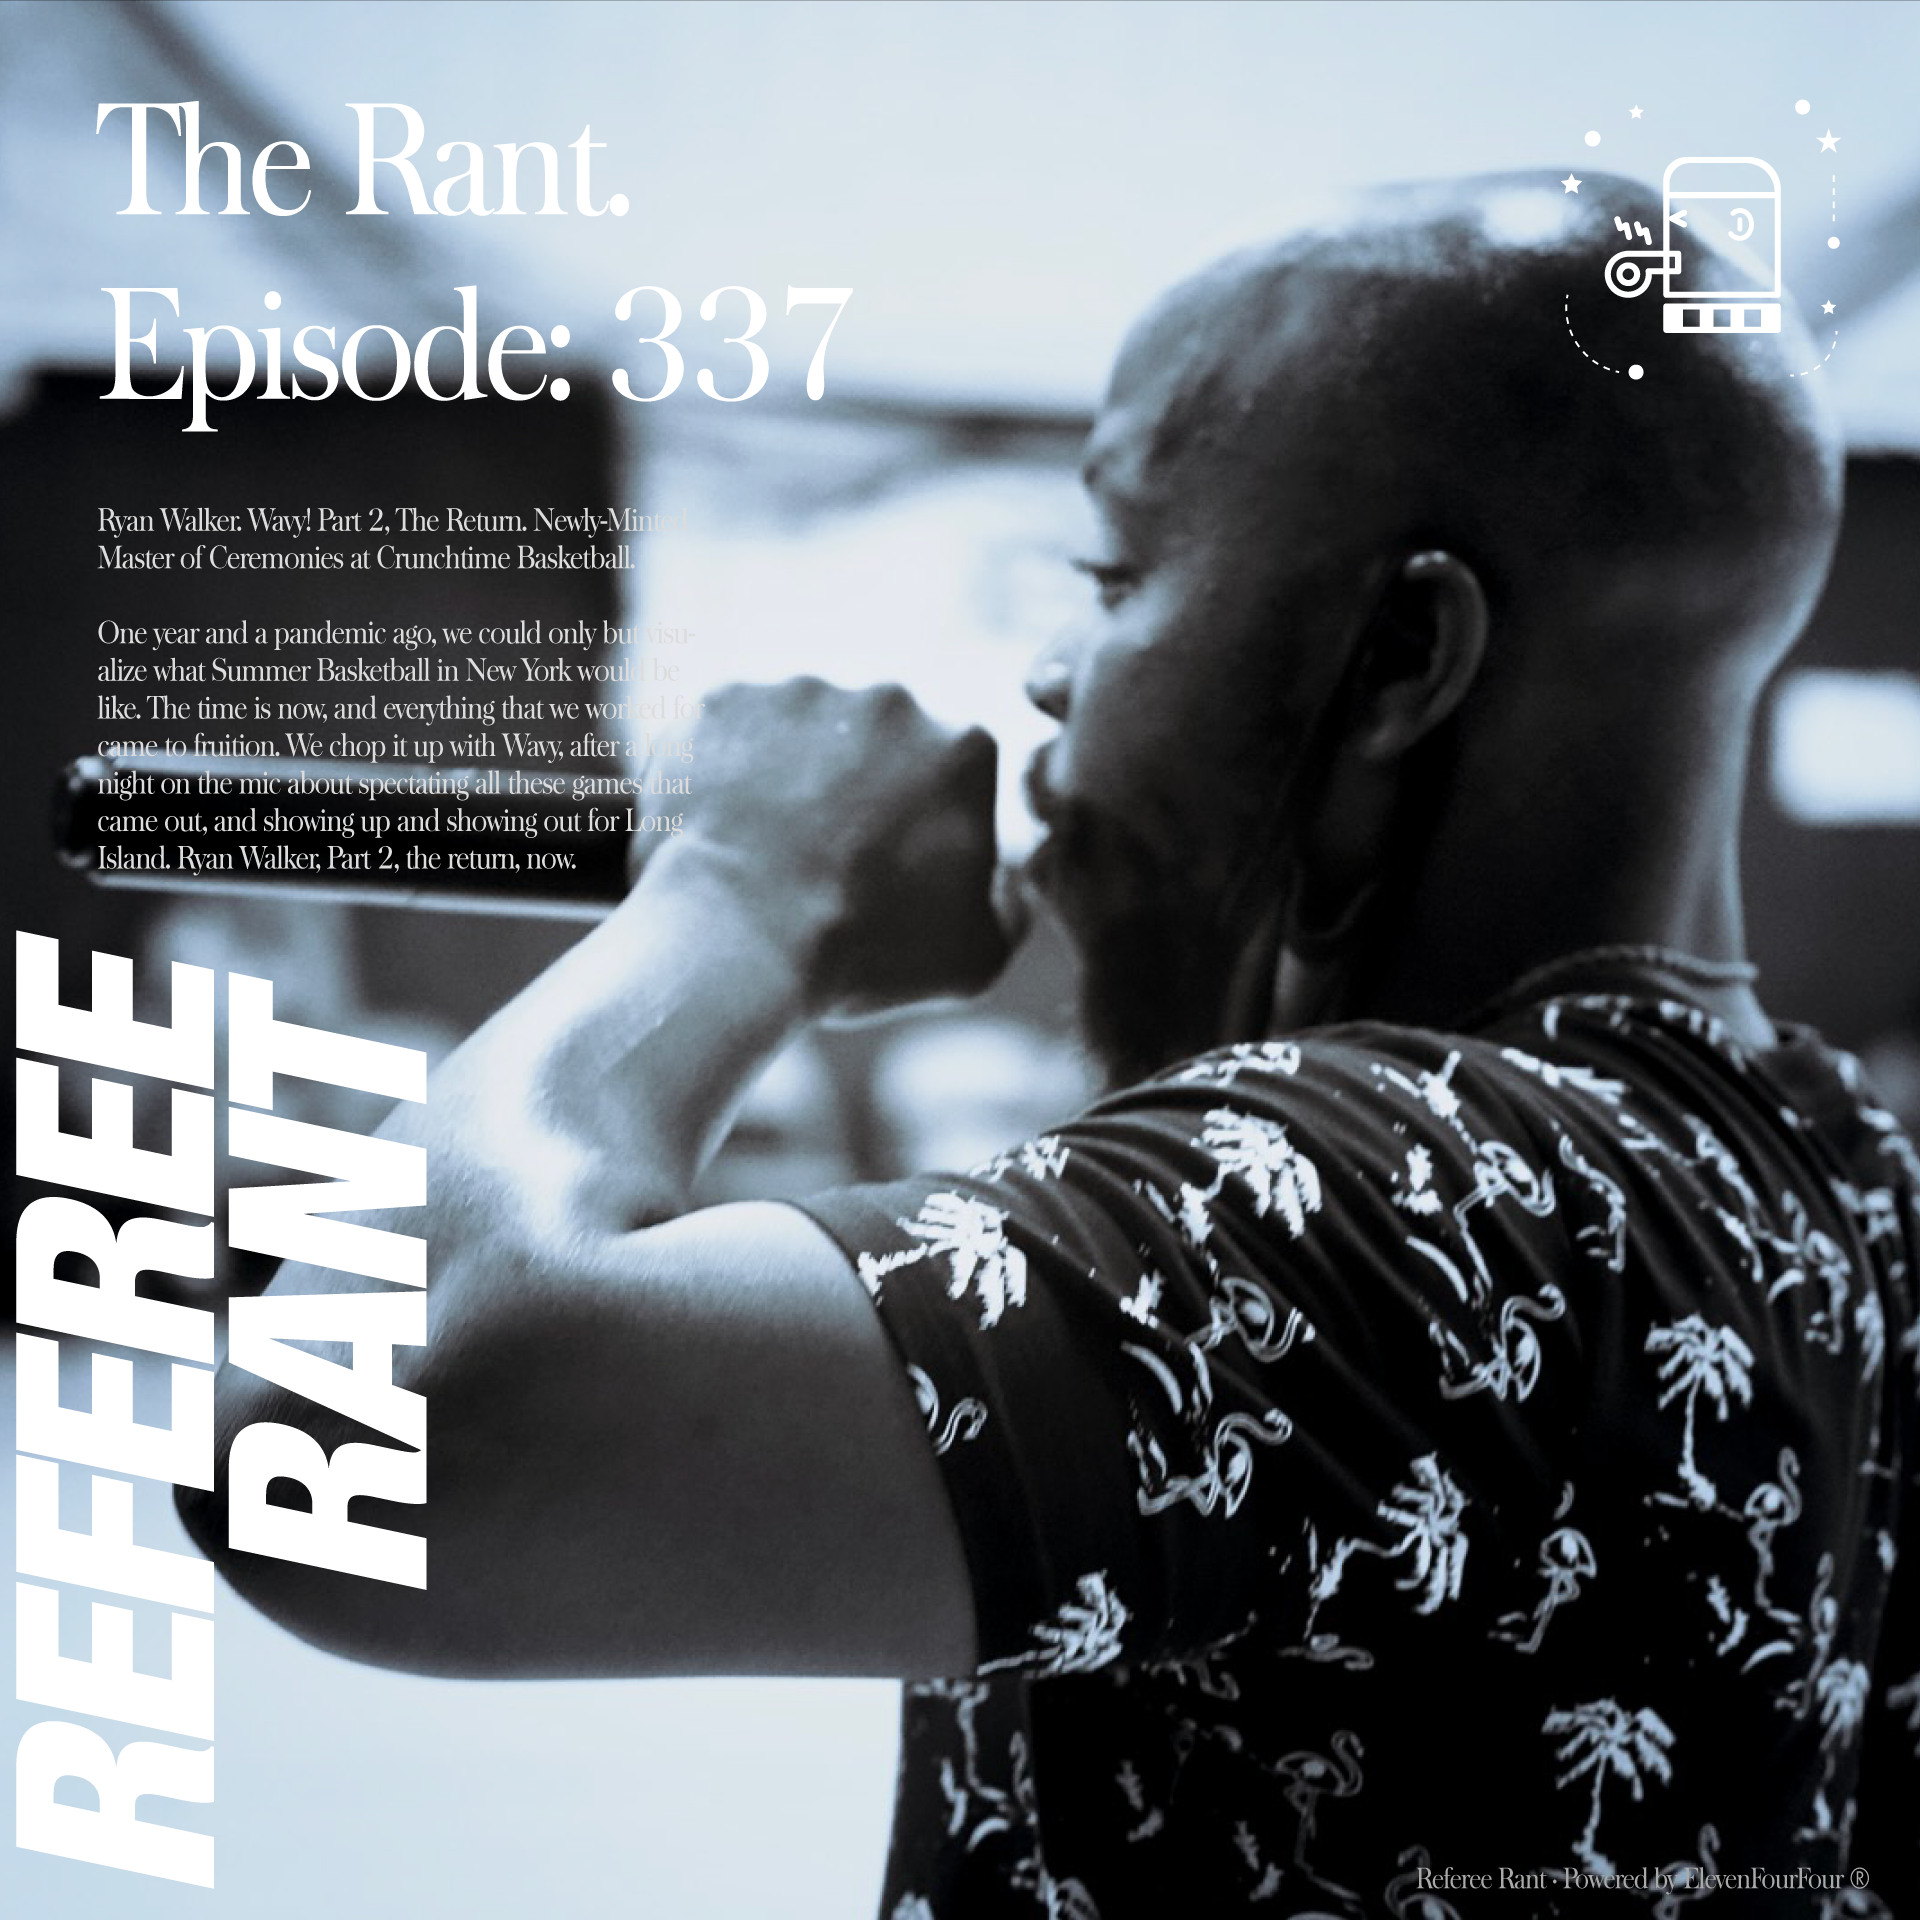 Episode 337, The Rant: Ryan Walker. Wavy! Part 2 - The Return.